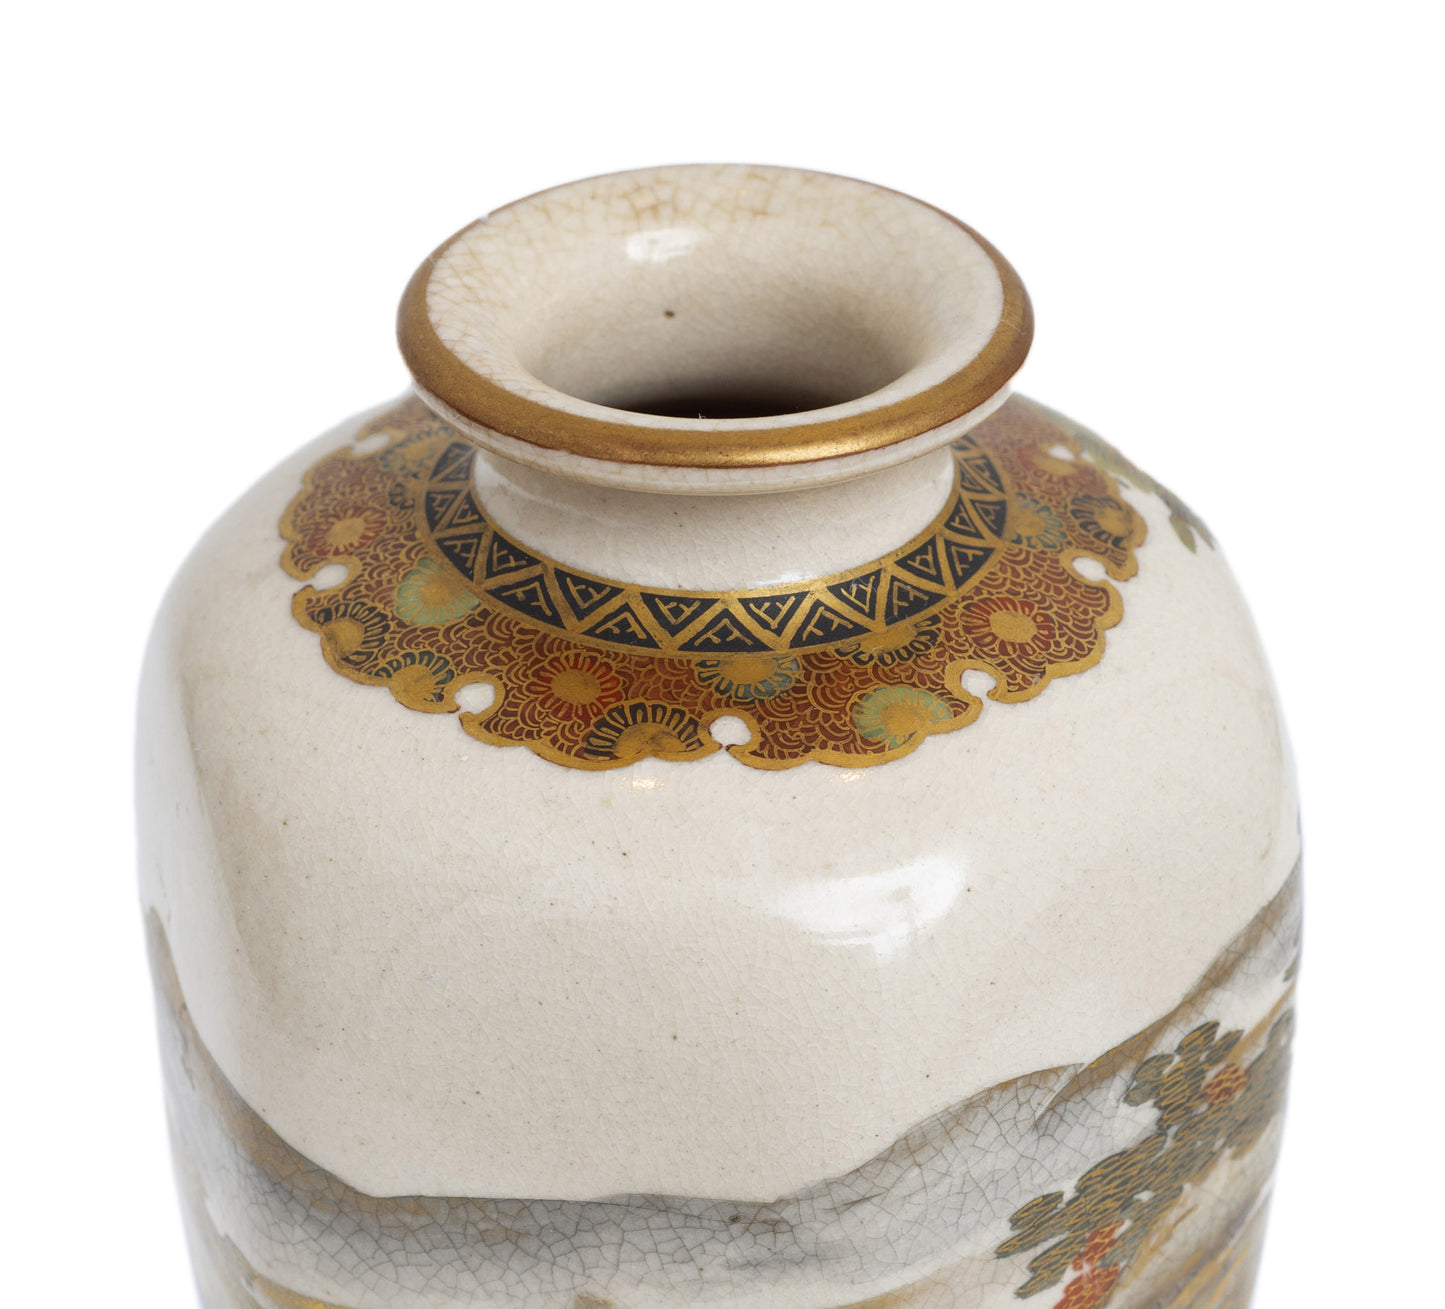 Antique Japanese Satsuma Ware Vase with Bijin & Child and Fine Gilt Work (Code 2841)